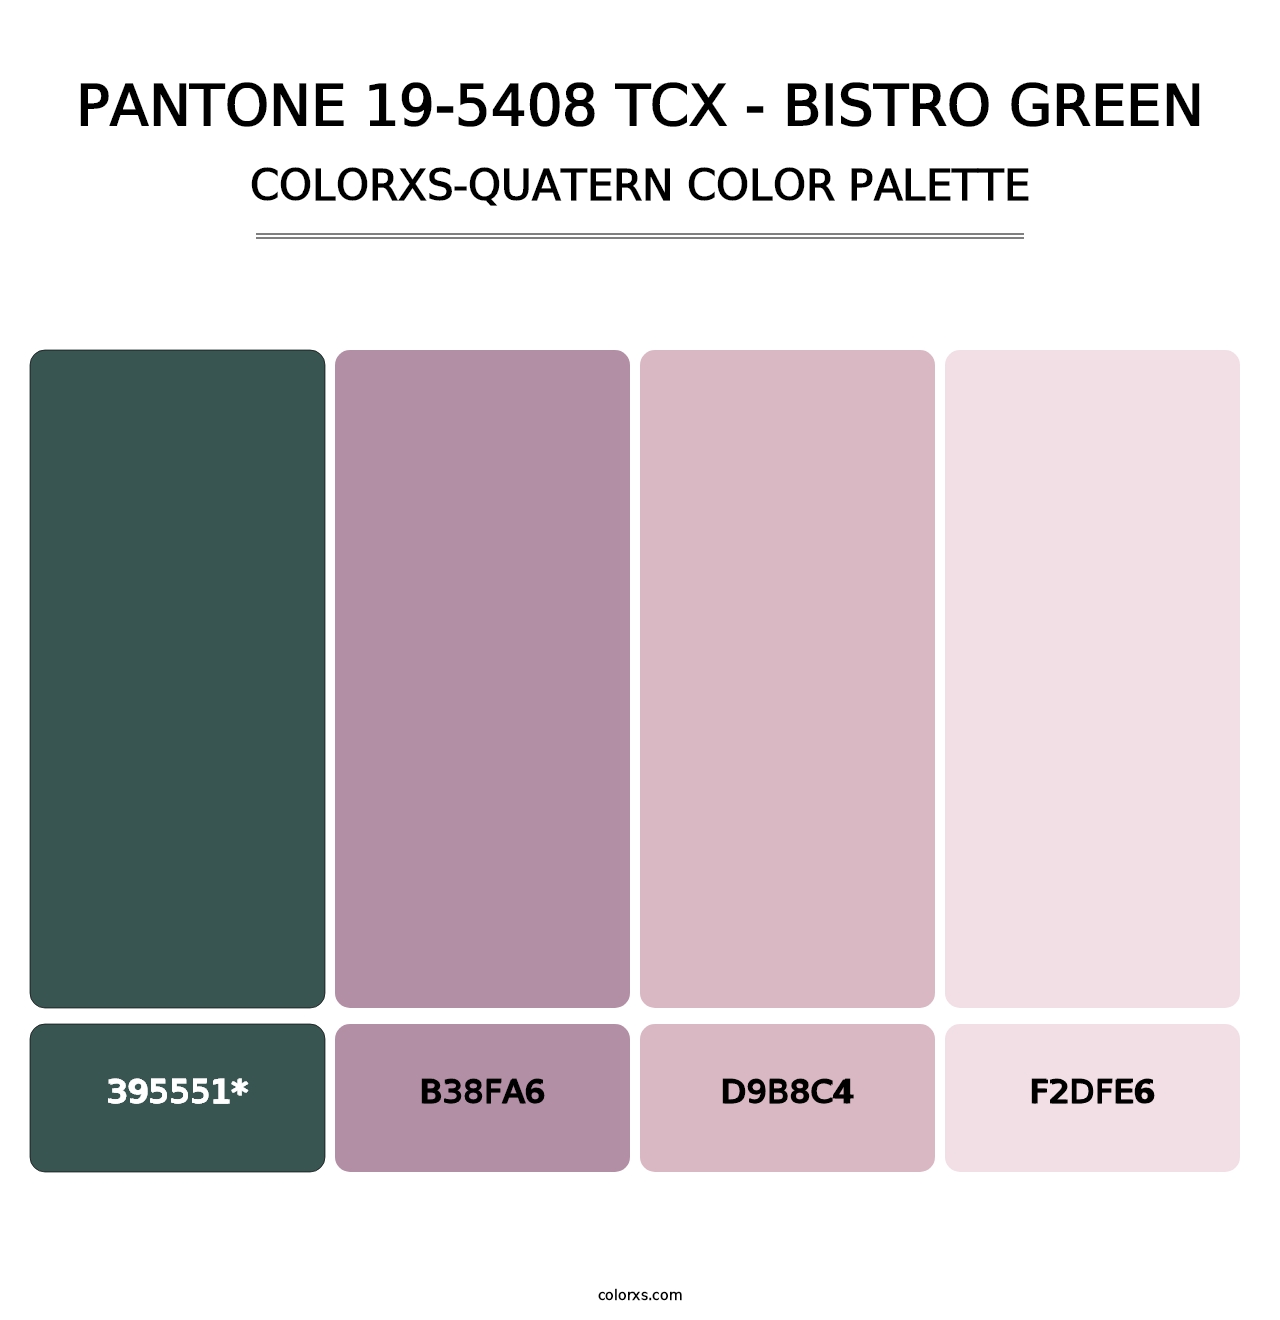 PANTONE 19-5408 TCX - Bistro Green - Colorxs Quatern Palette